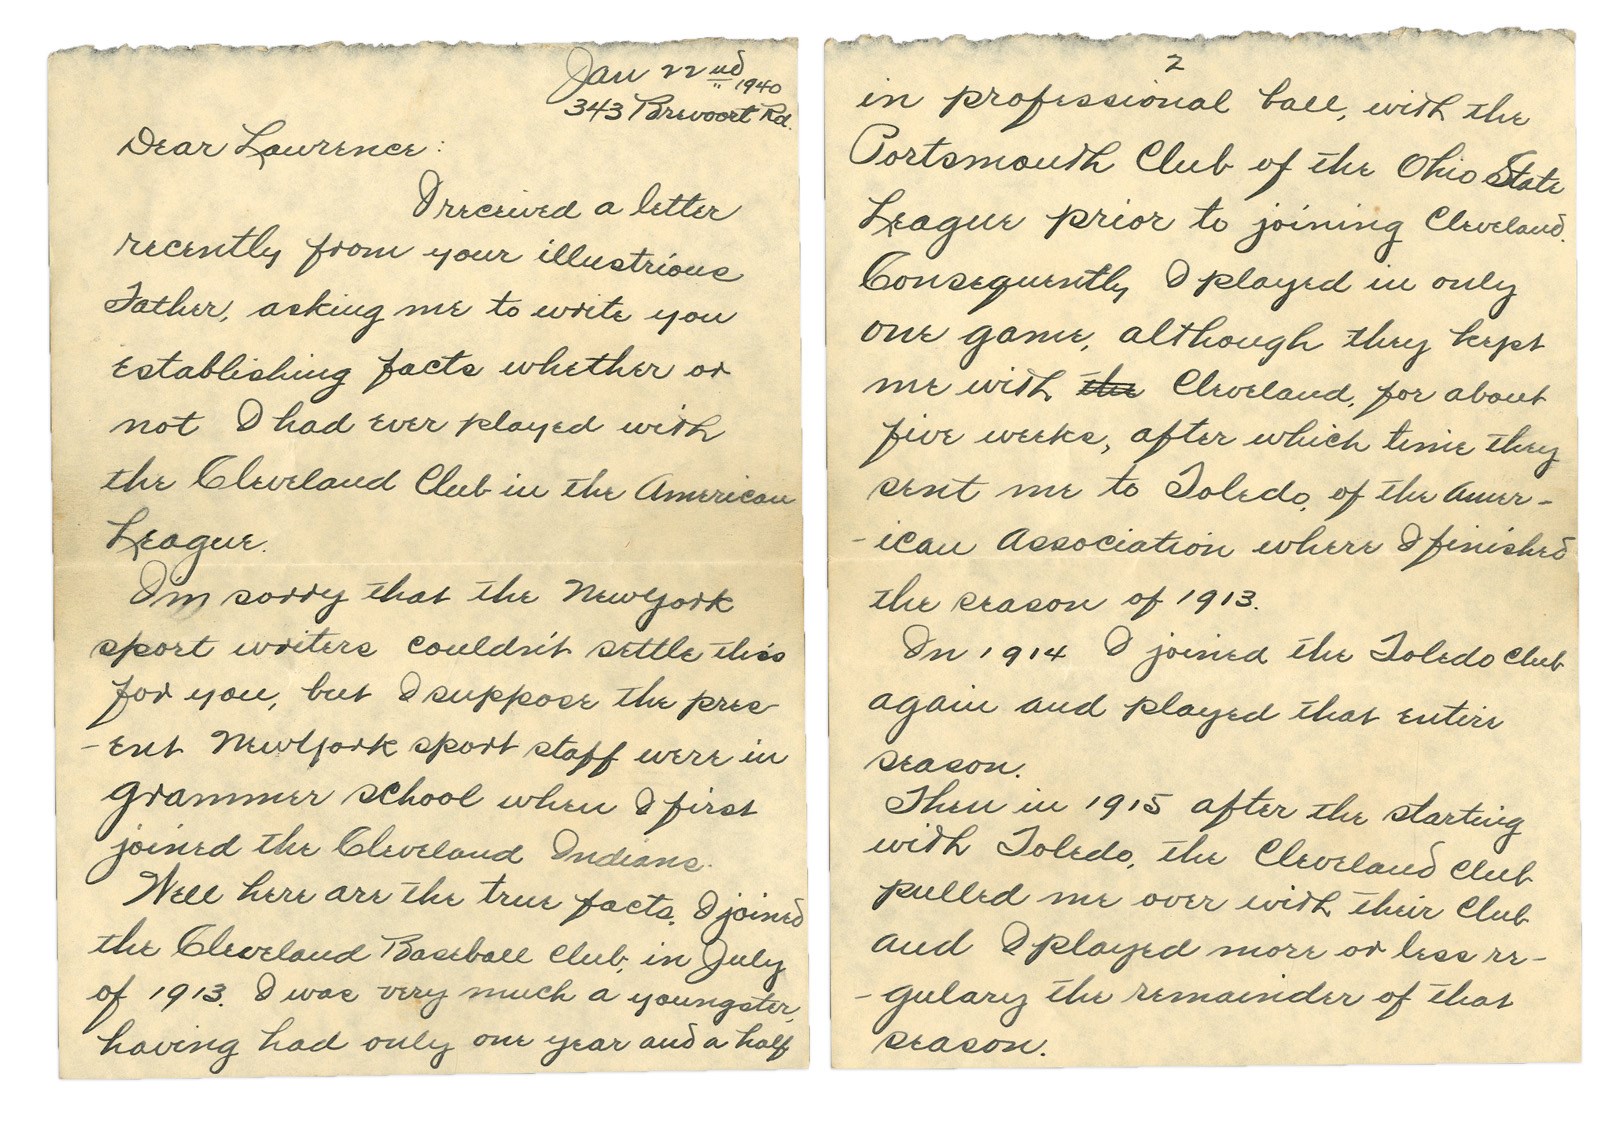 Baseball Autographs - 1940 Billy Southworth Handwritten Letter to Major Leaguer with "Joe Jackson" Content (PSA)